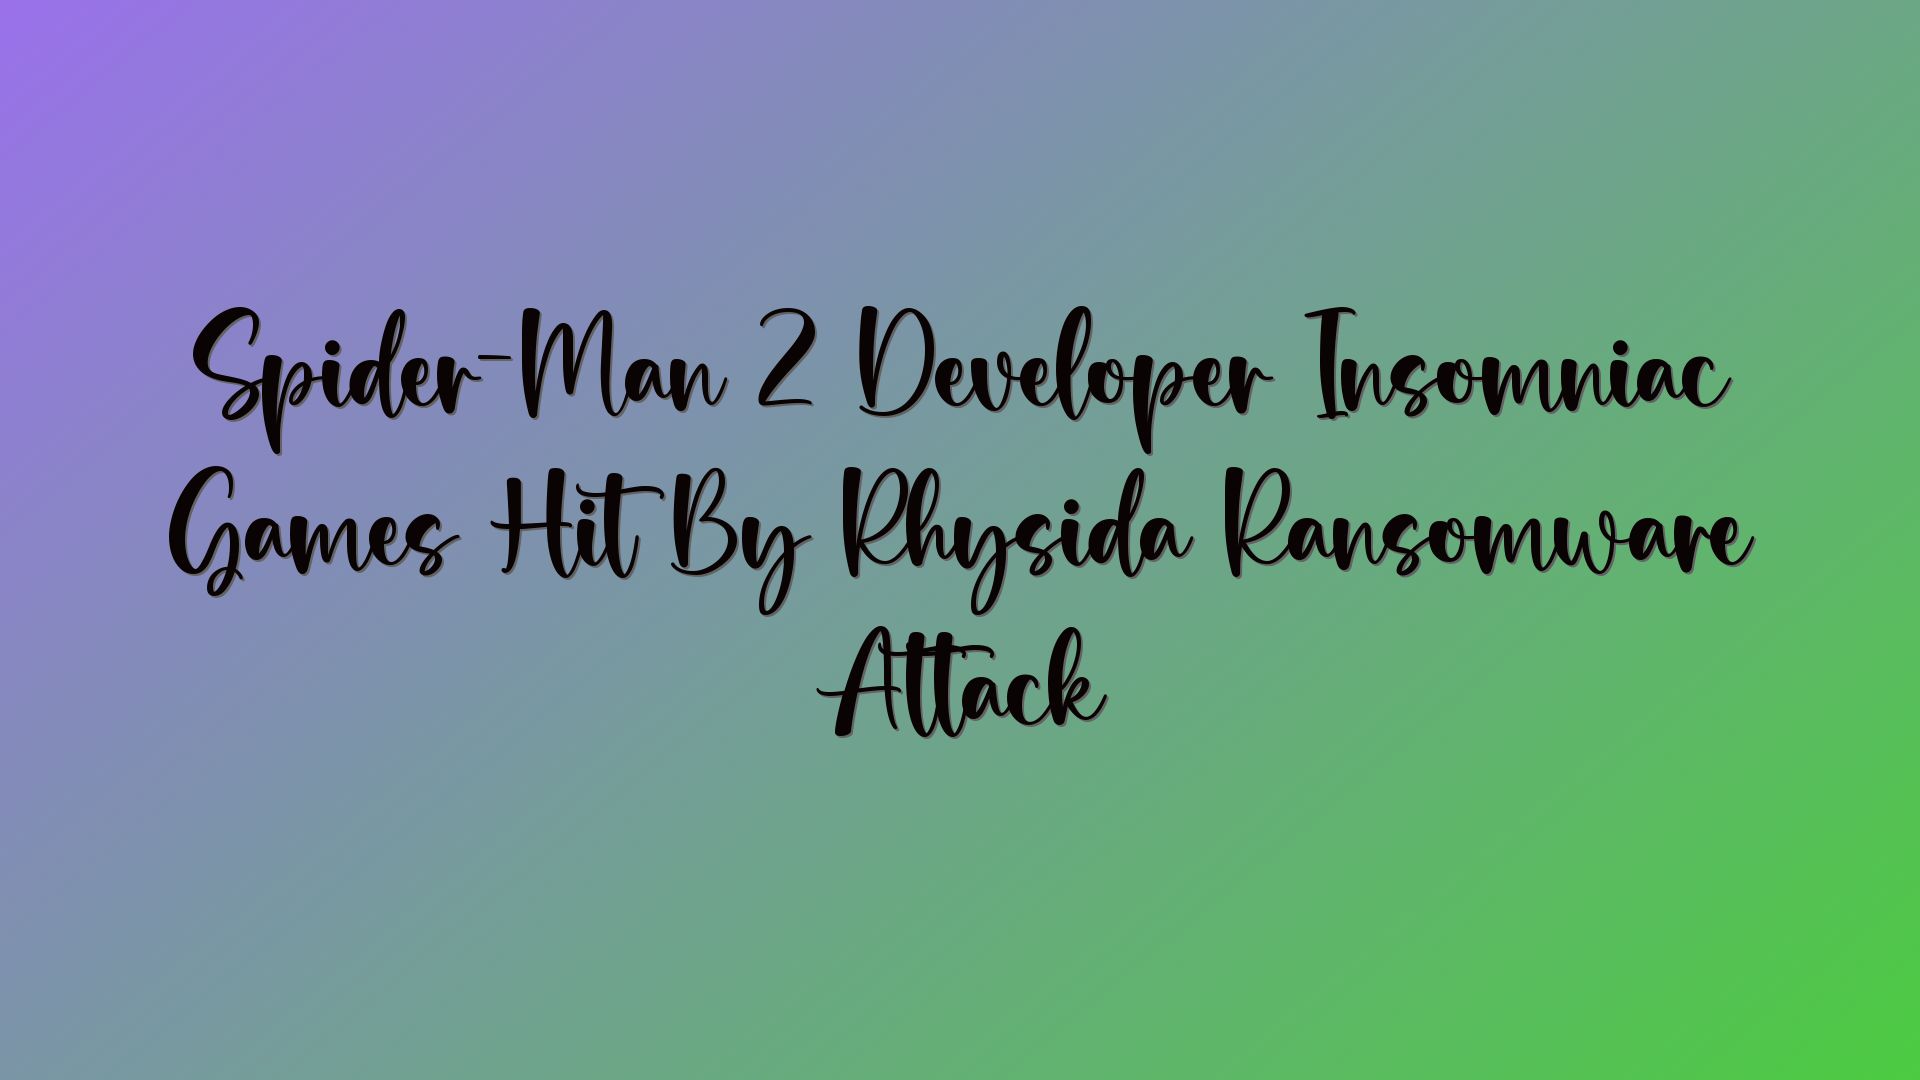 Spider-Man 2 Developer Insomniac Games Hit By Rhysida Ransomware Attack